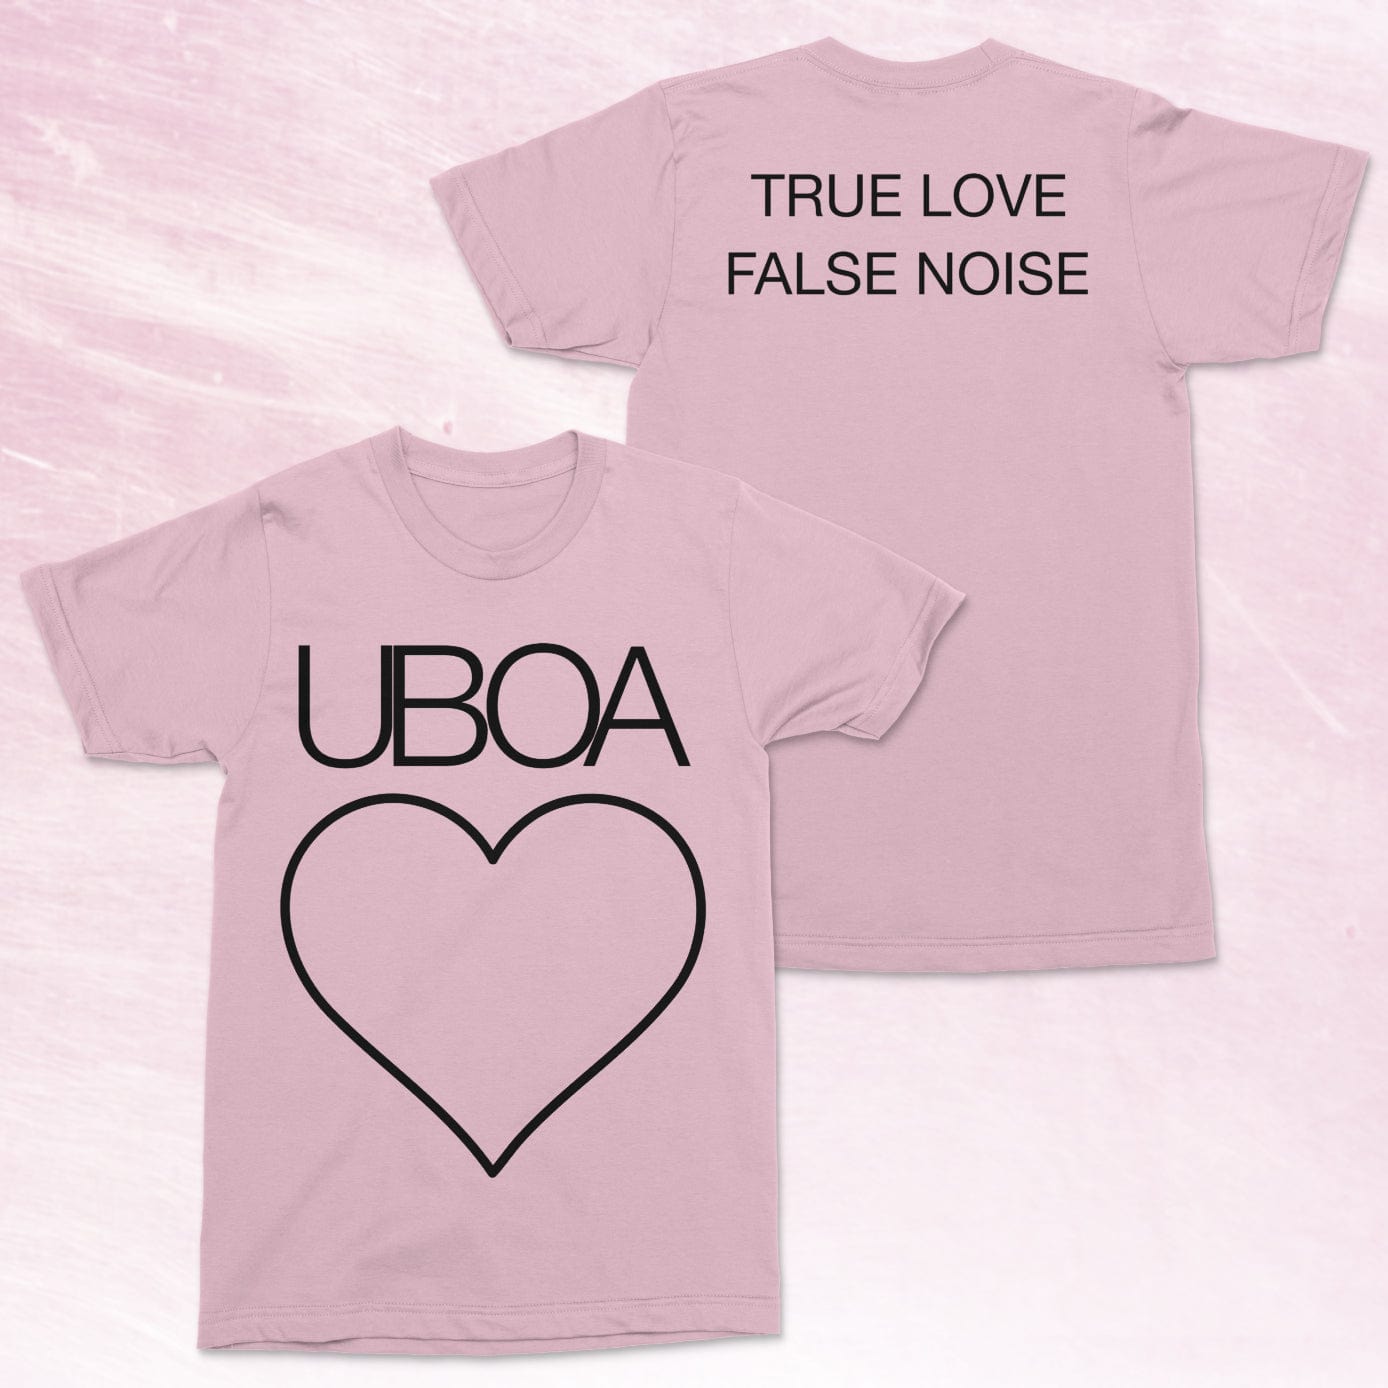 The Flenser Apparel Uboa "True Love, False Noise" Shirt